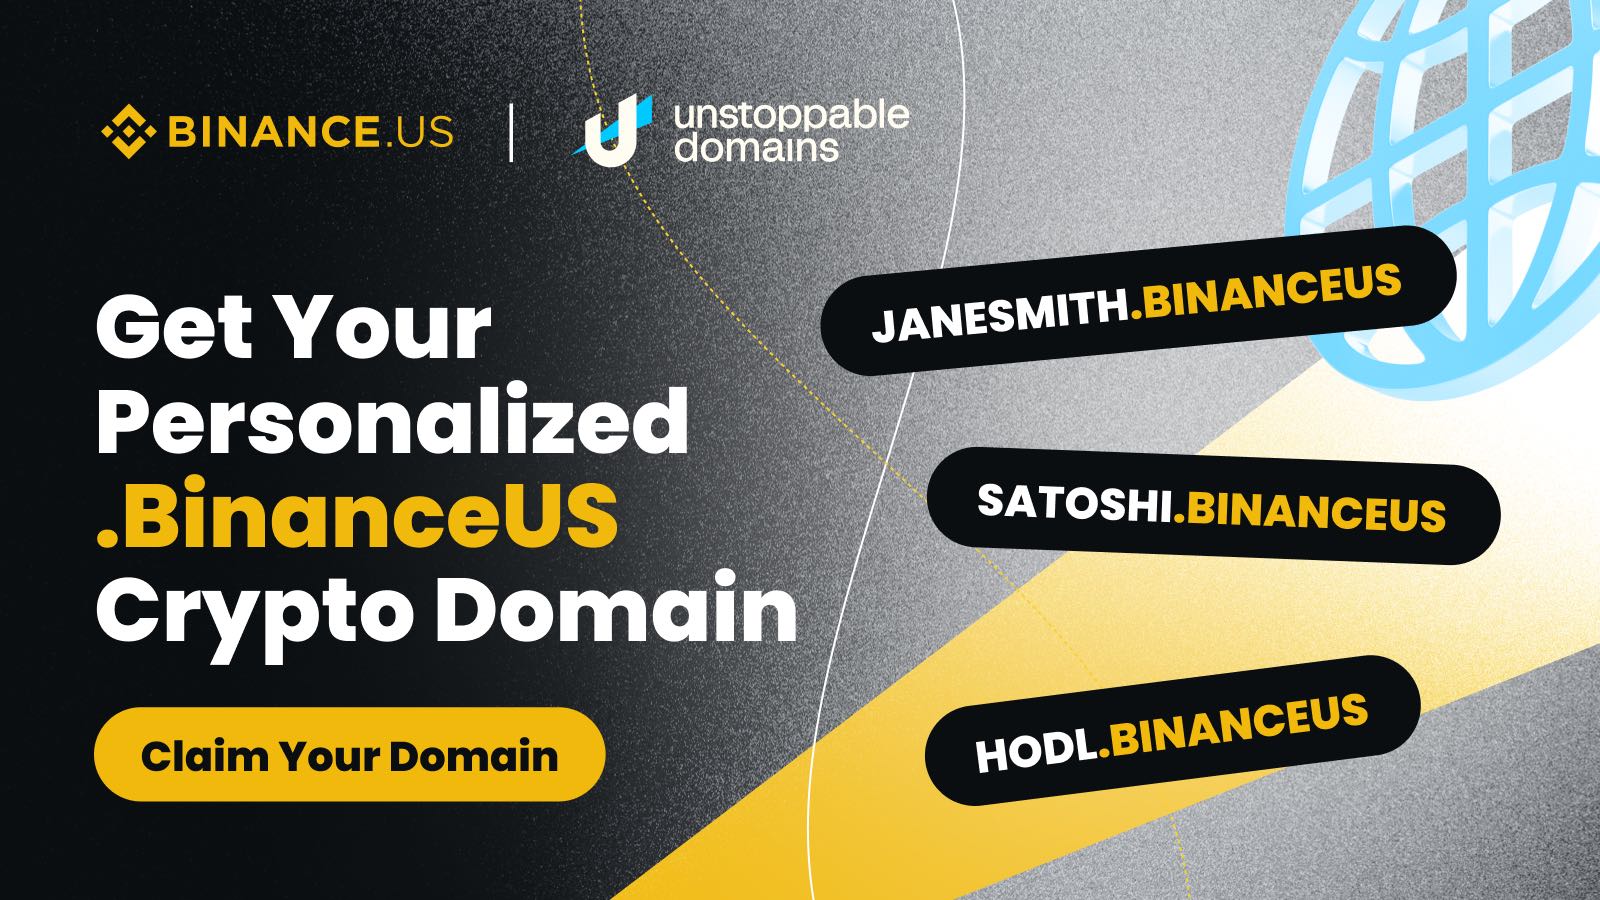 Introducing Crypto Domains on Binance.US